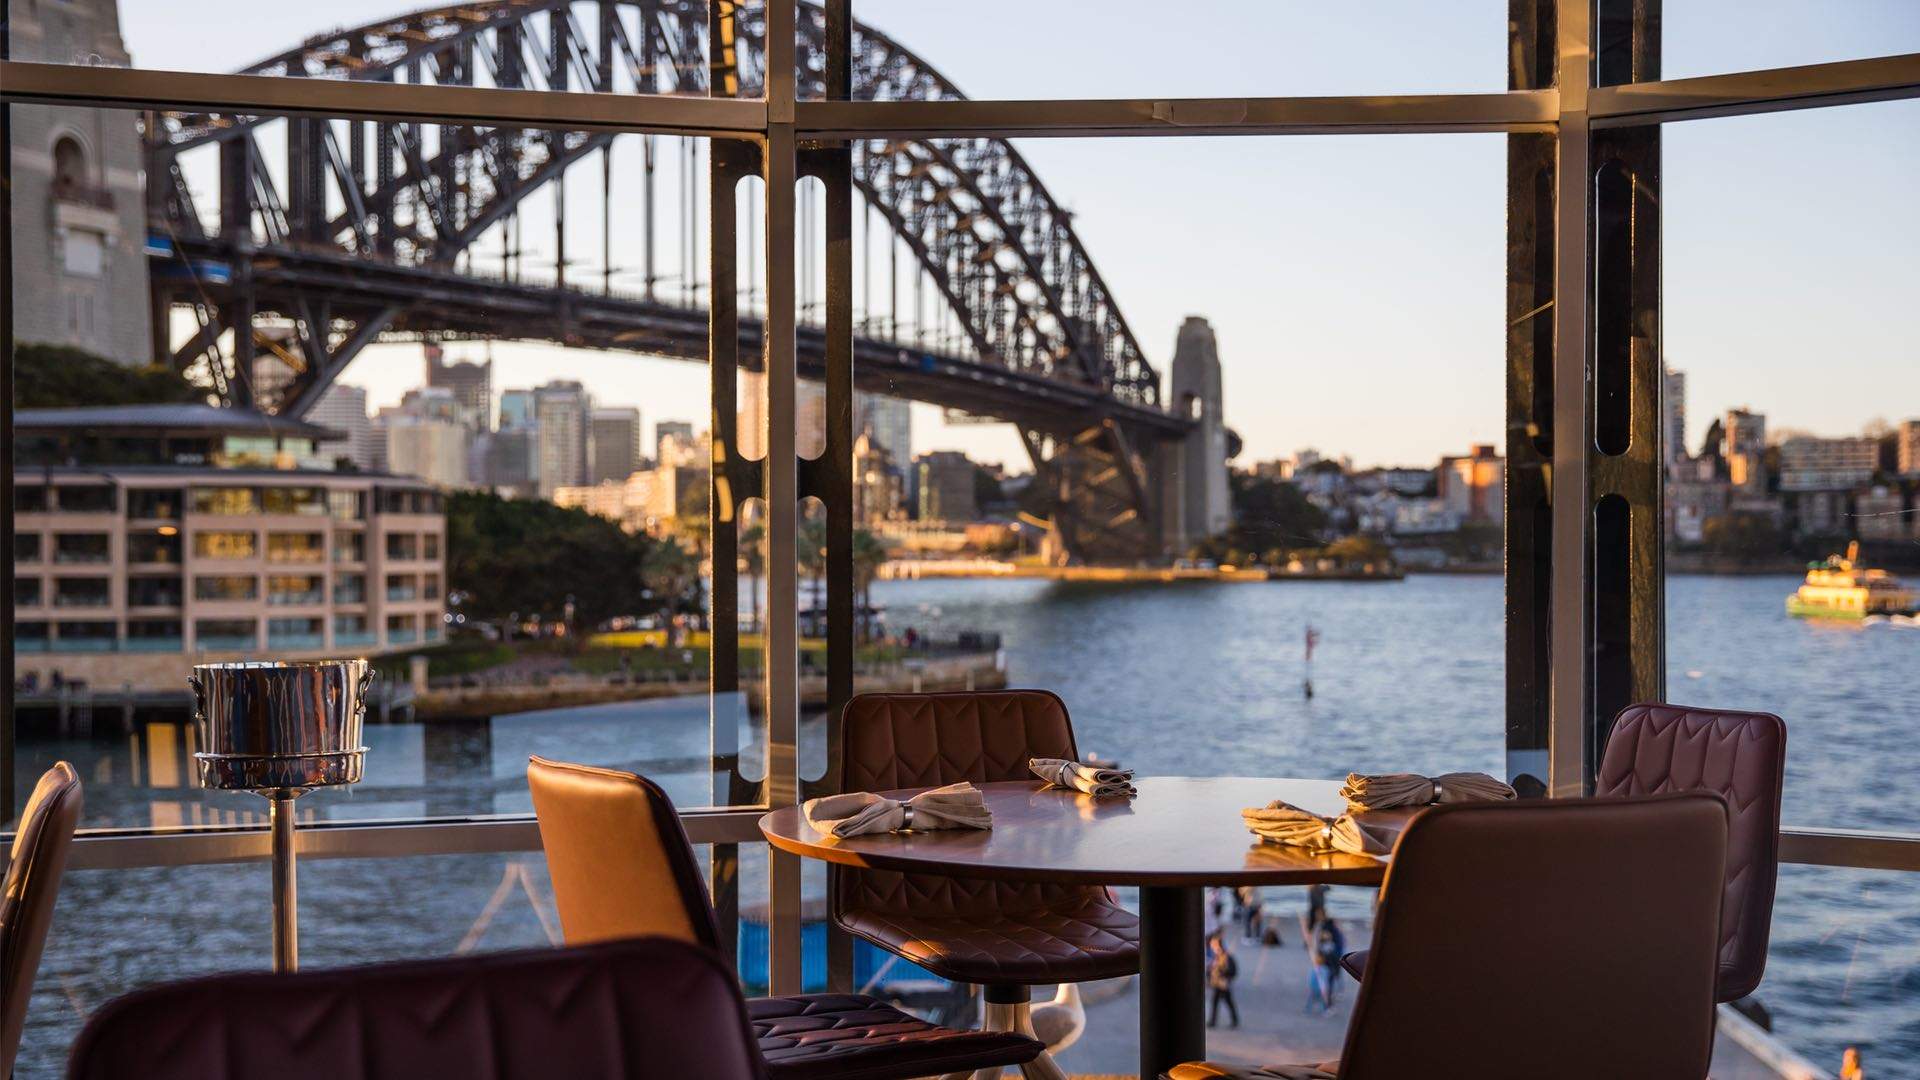 Quay Restaurant - one of the best restaurants in Sydney.